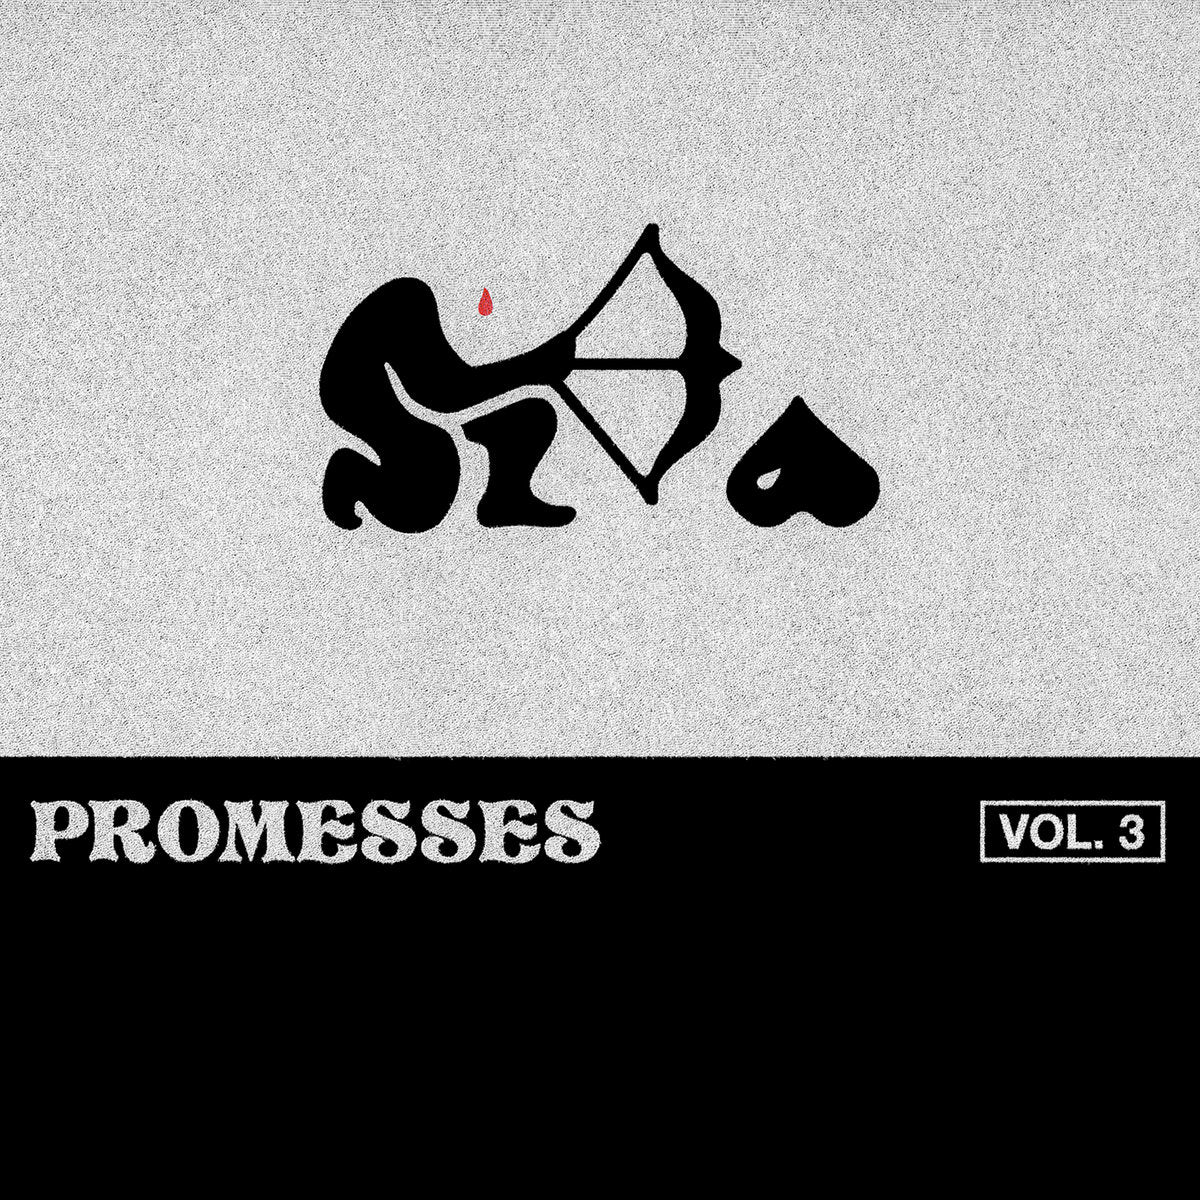 Promesses Vol. 3 cassette tape